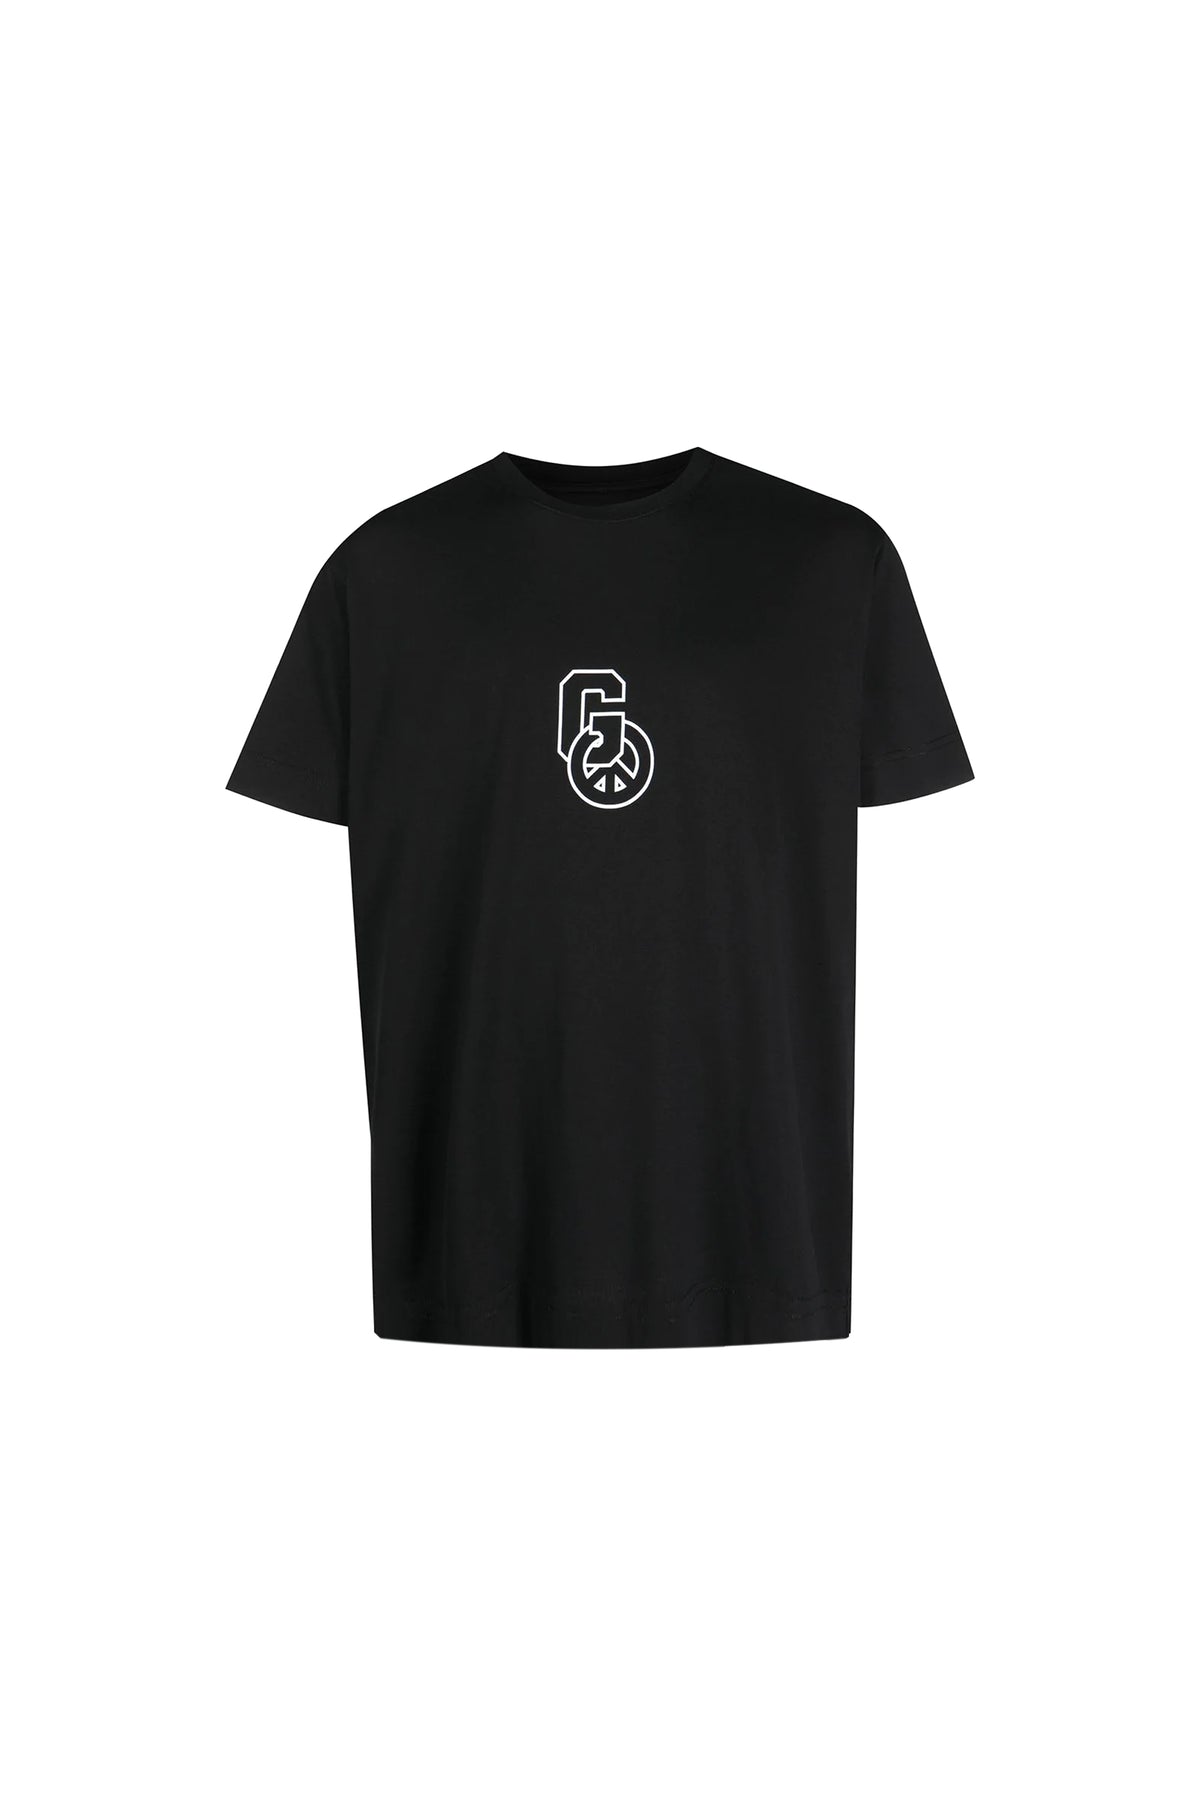 Givenchy logo-print cotton T-shirt